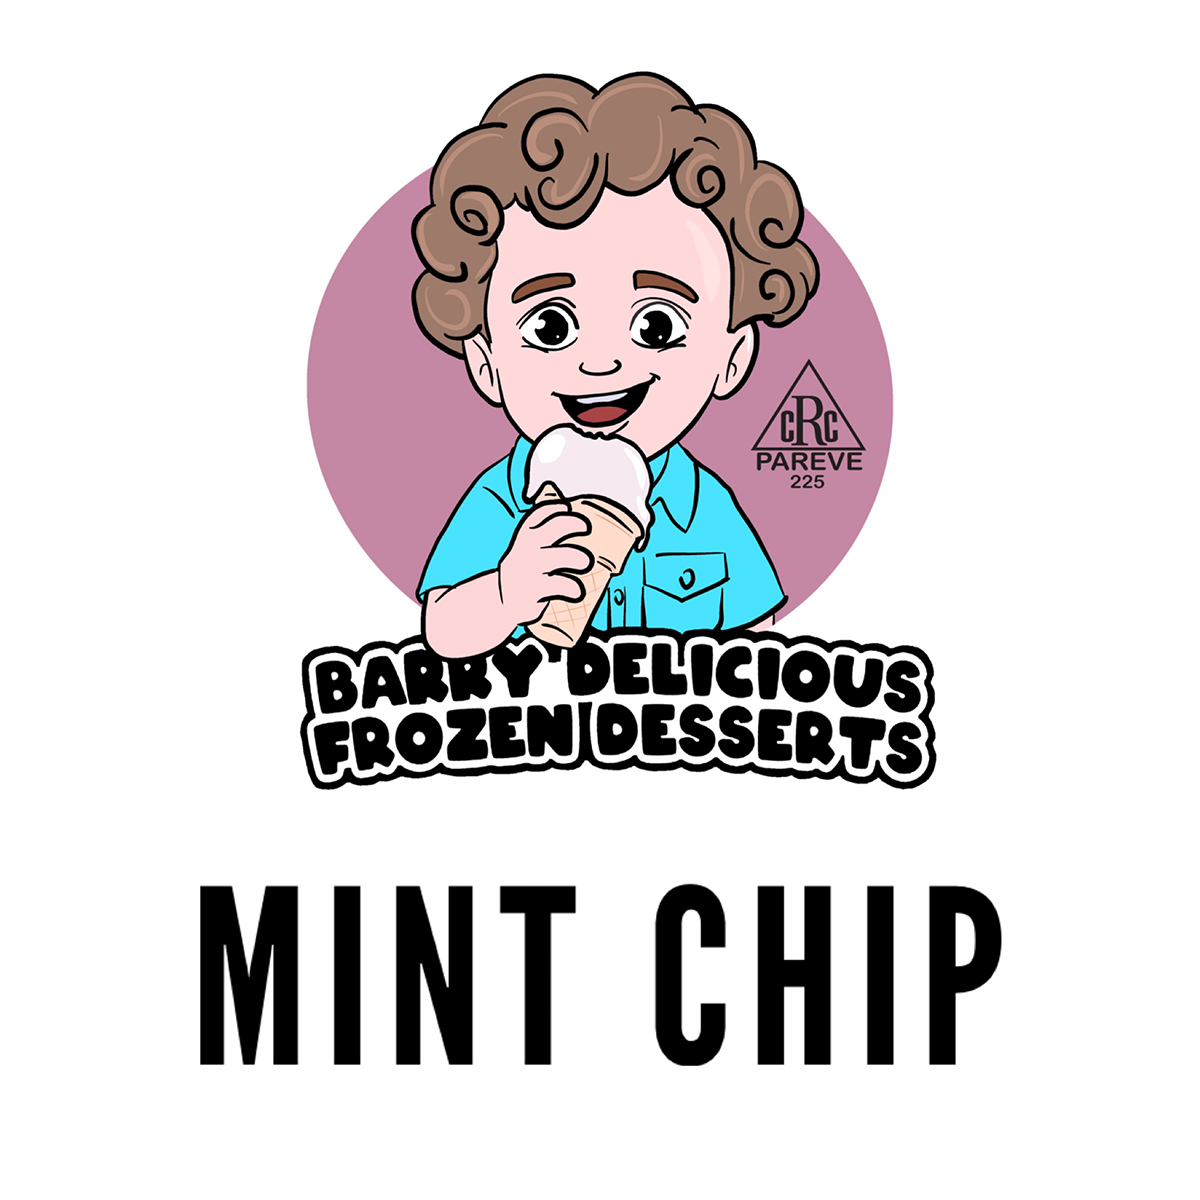 Mint Chip Barry Delicious Parve Ice Cream